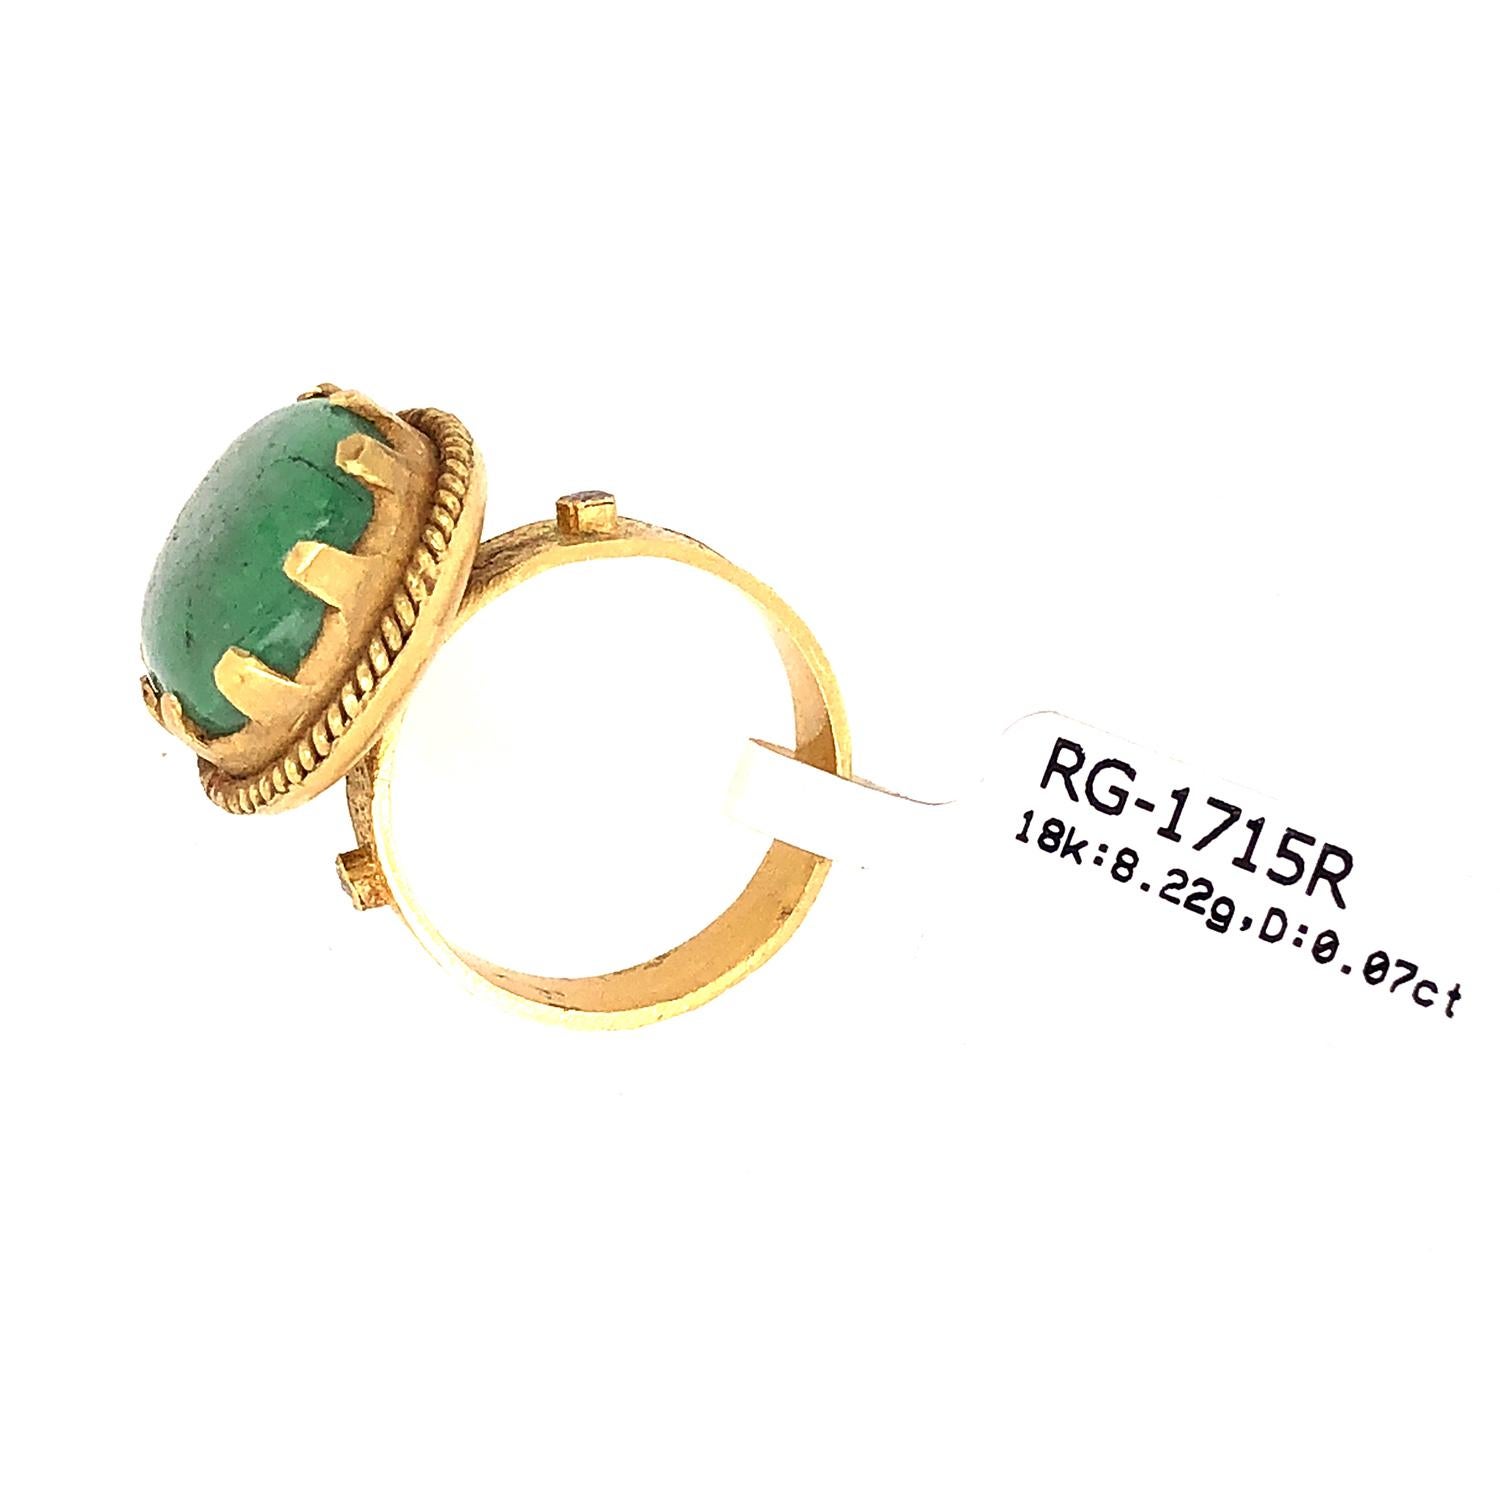 Artisan Antique Looking Emerald Diamond Ring in 18K Yellow Gold